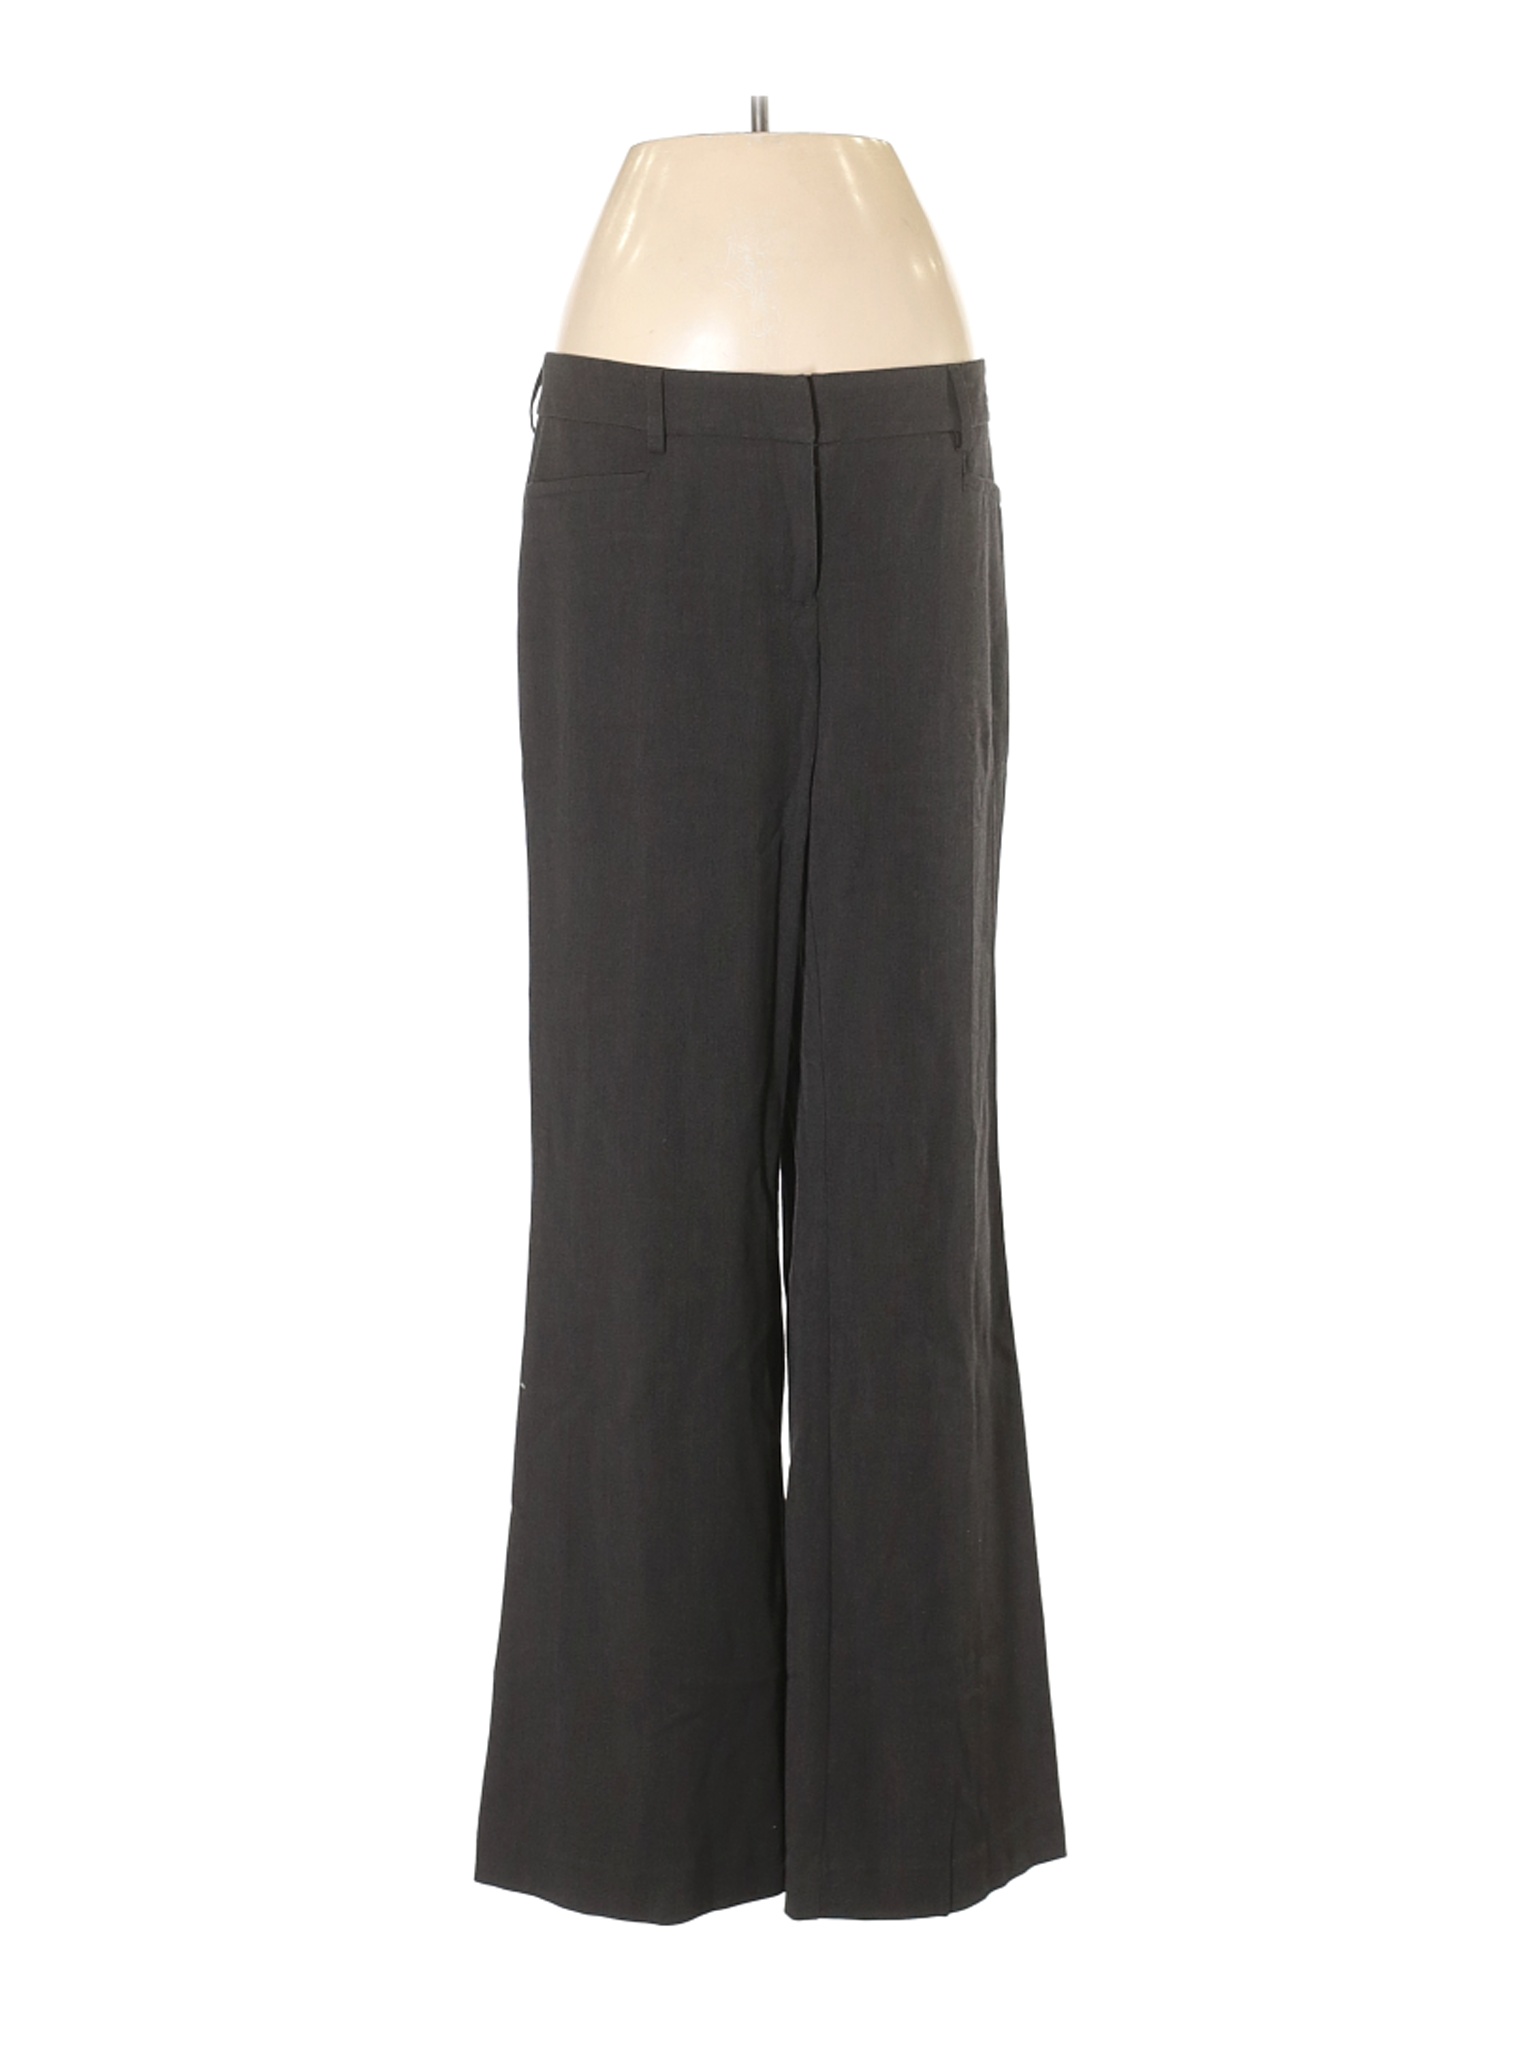 Apt. 9 Women Black Dress Pants 4 | eBay